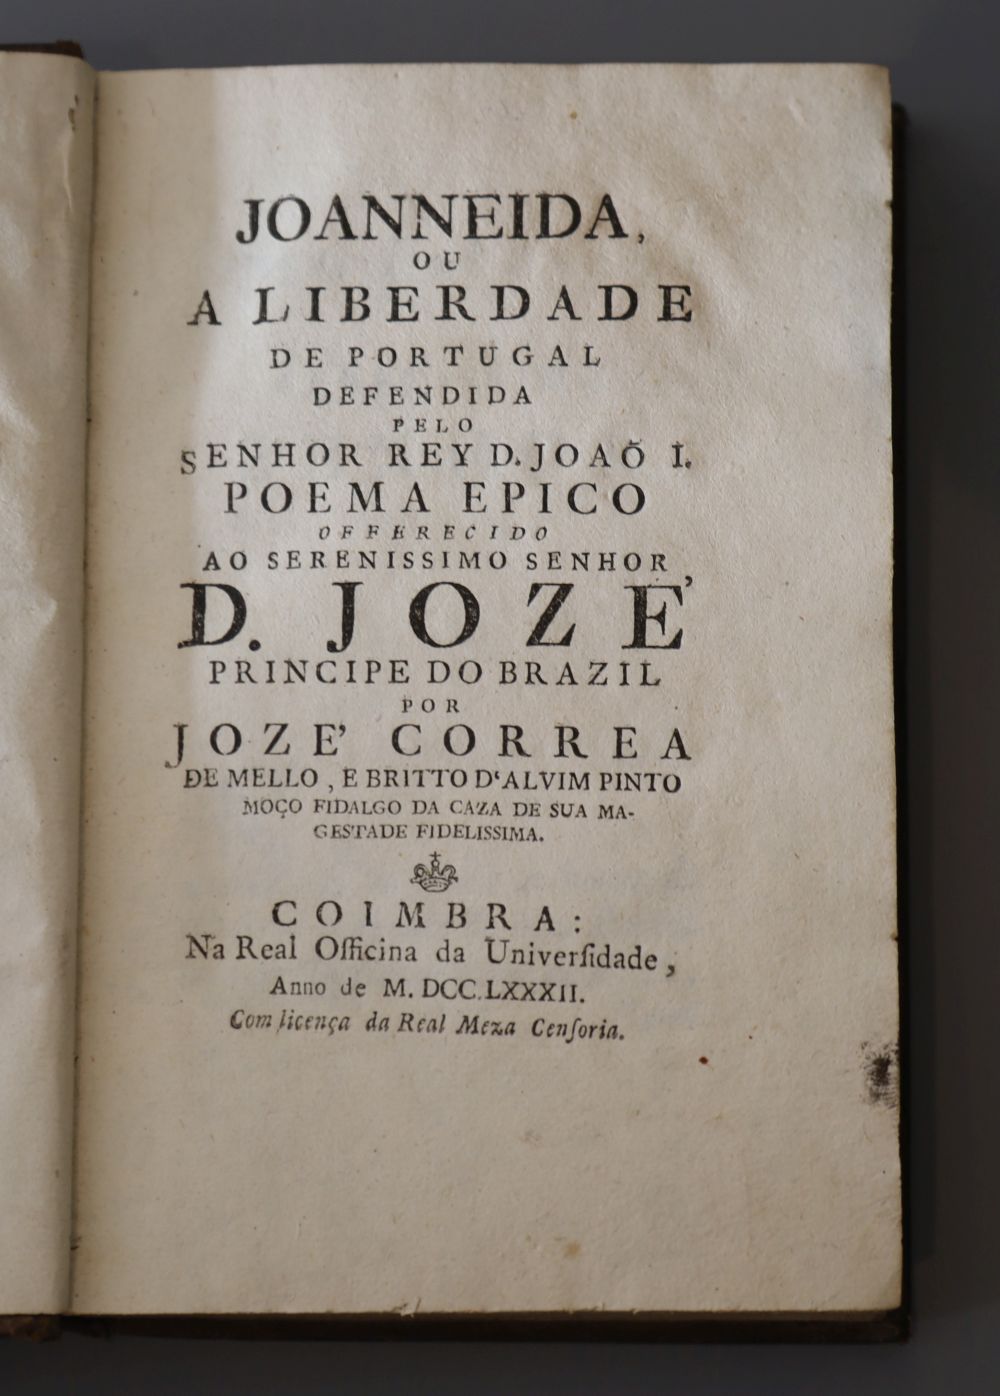 Correia Picanco, José, 1745-1825 - Joanneida, ou, a liberdade de Portugal, calf, 8vo, Officina da Universidade, Coimbra, 1782